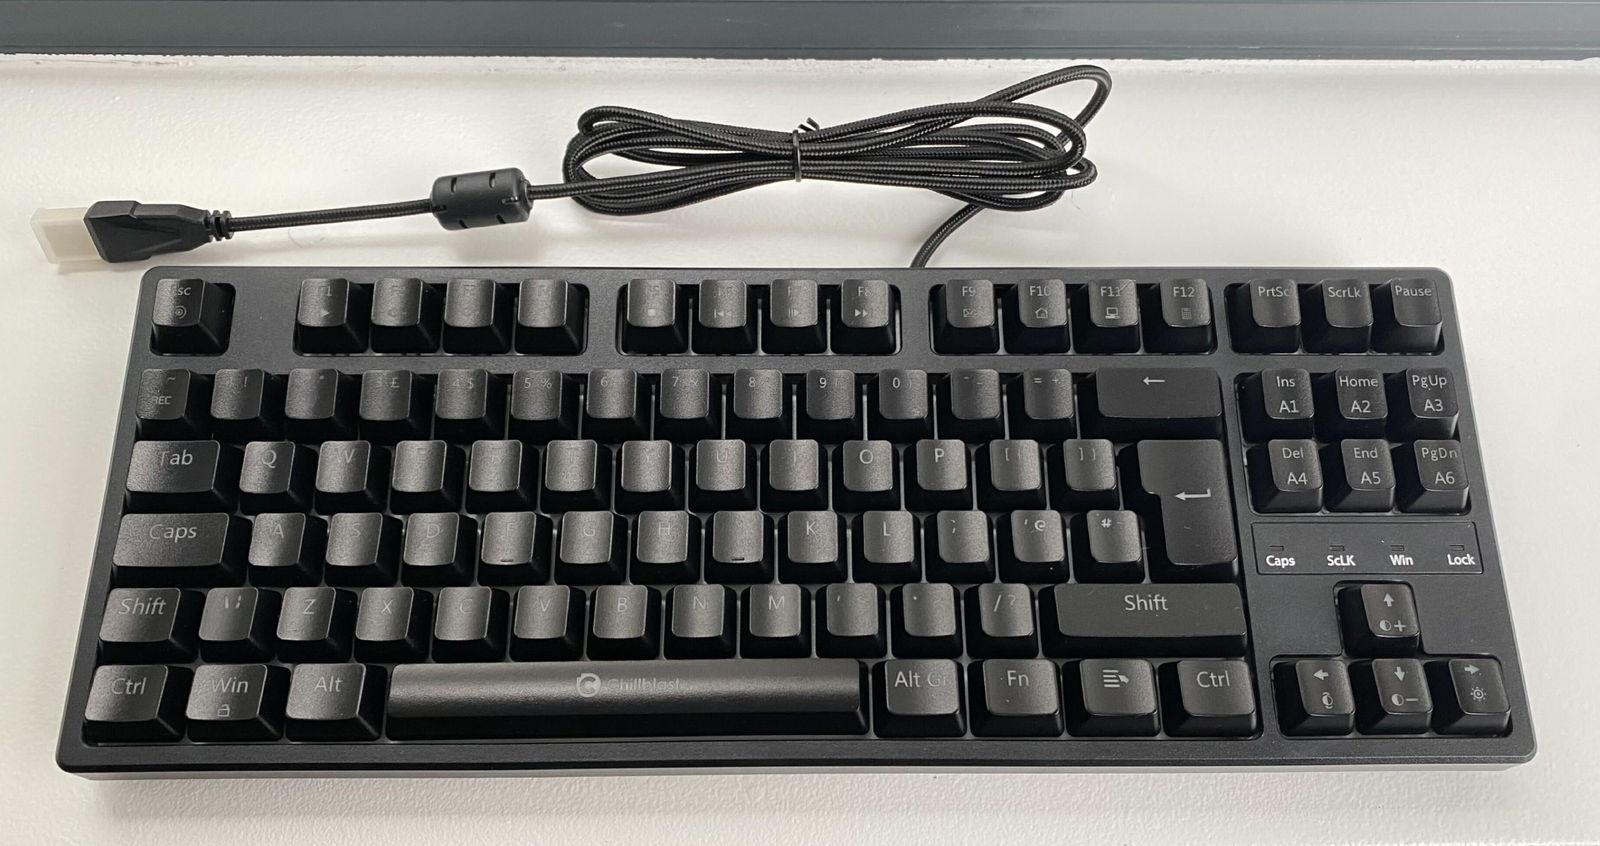 Image of the black Chillblast Imperium keyboard unplugged.